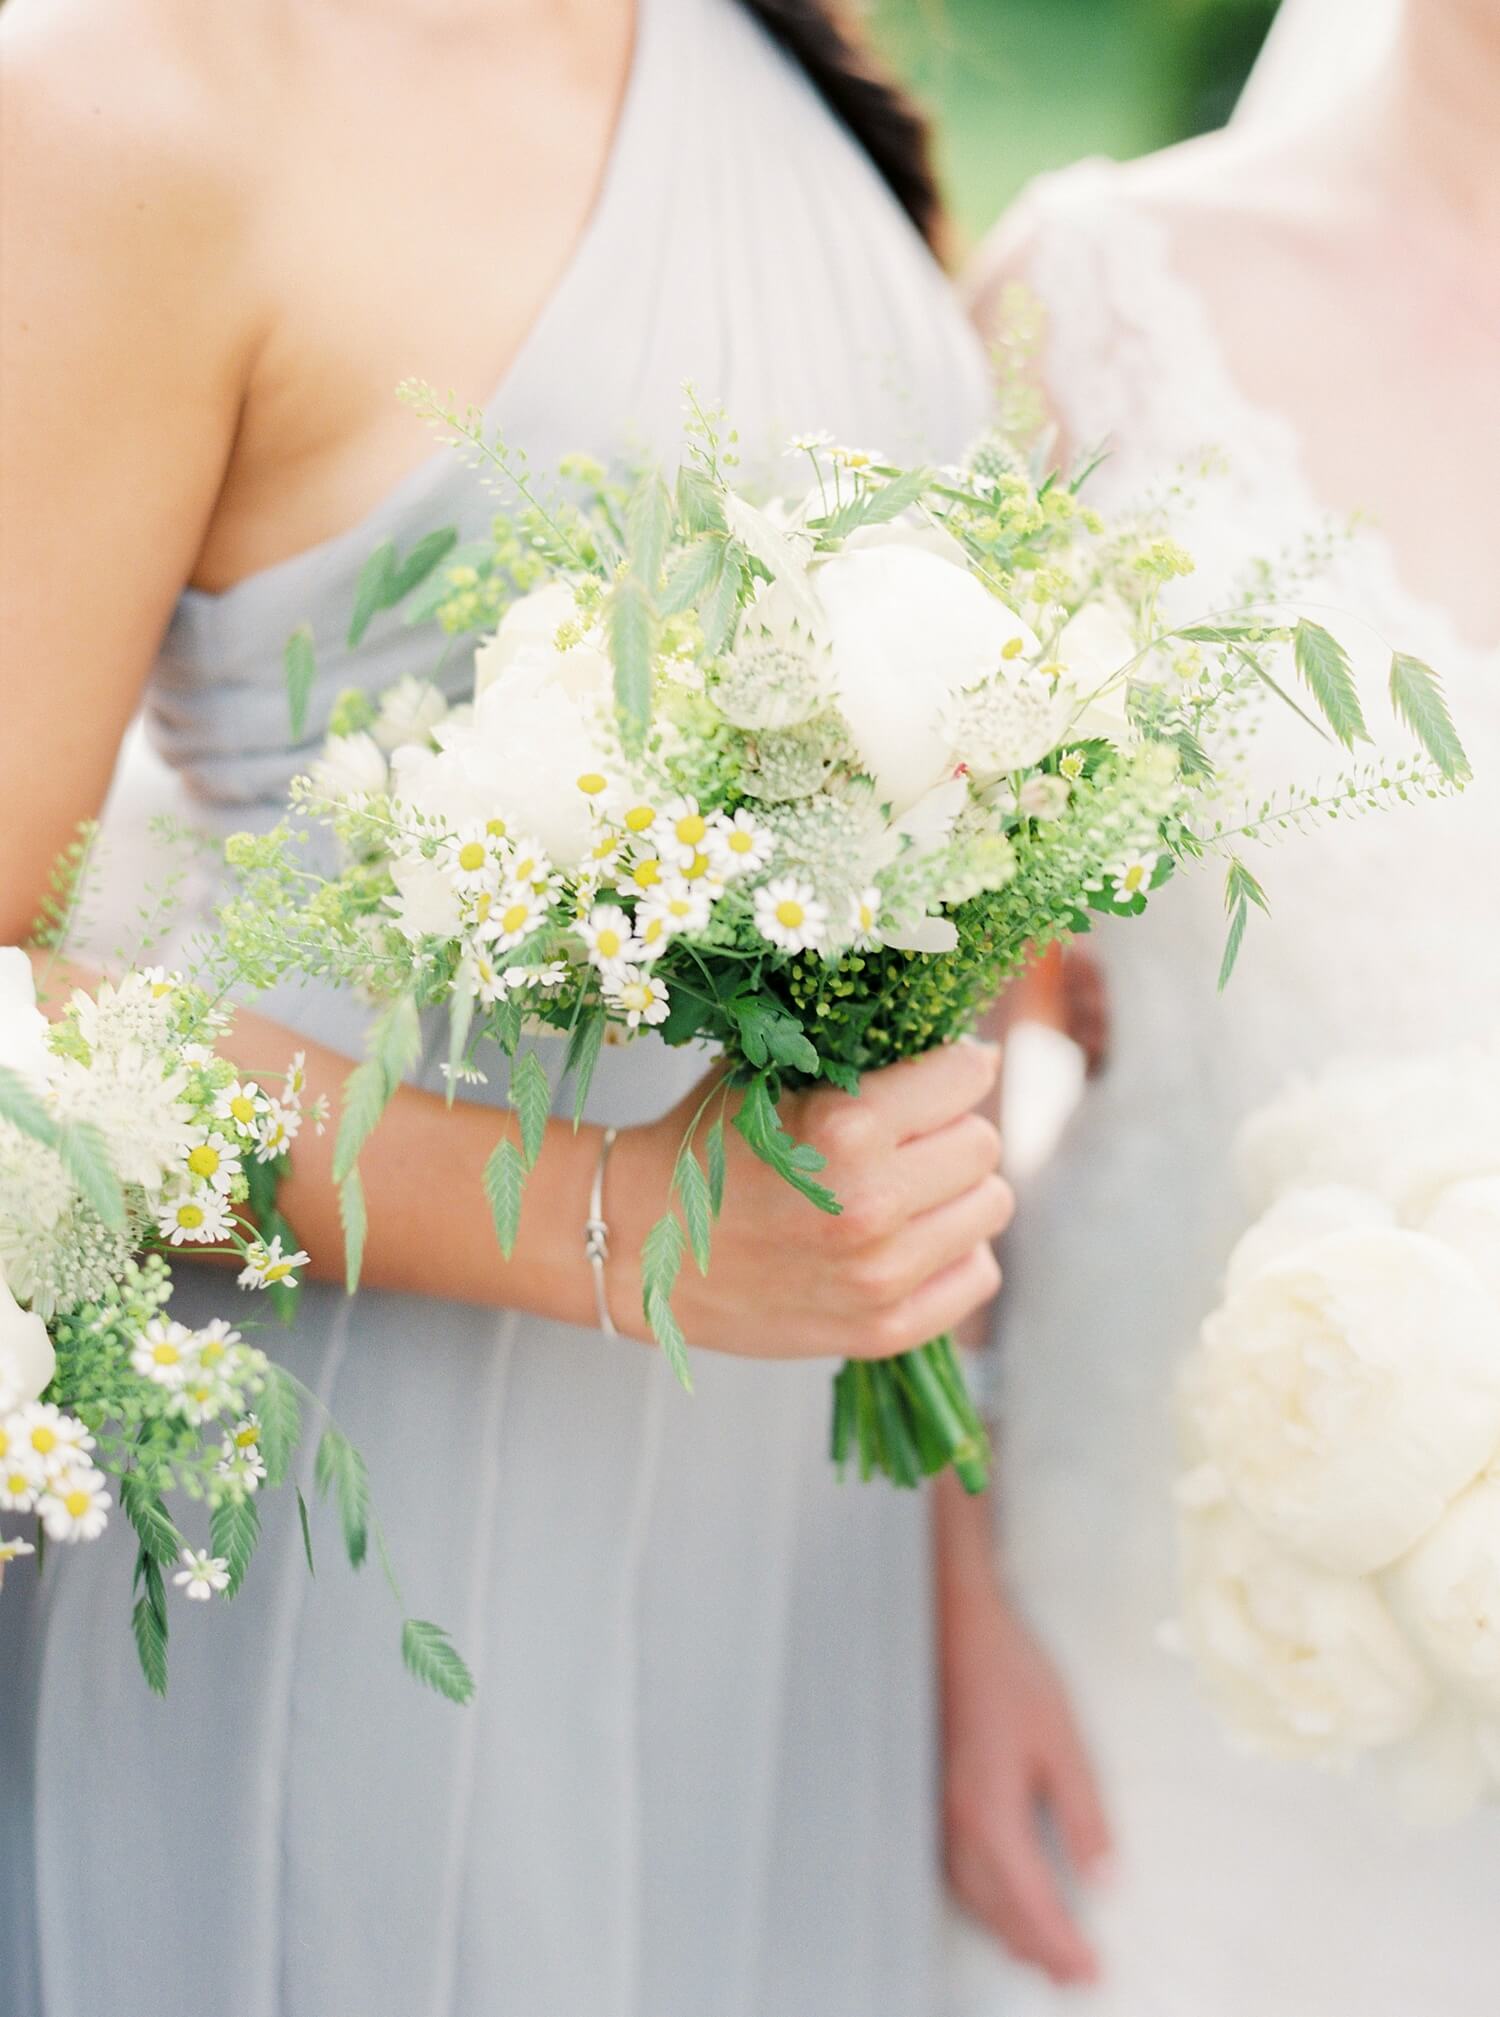 Swedish Midsummer wedding bouquet ideas